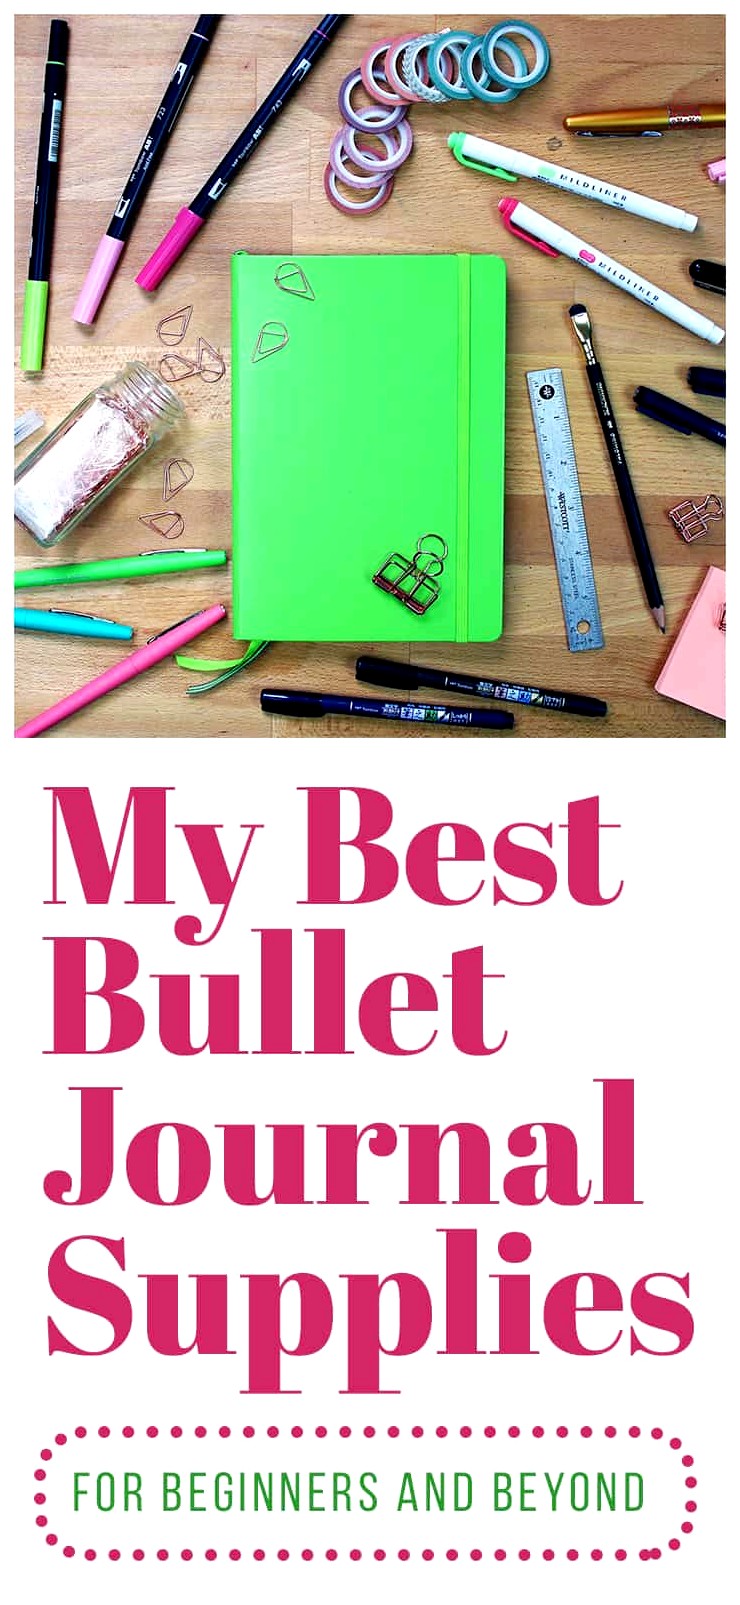 My Favorite Bullet Journal Supplies